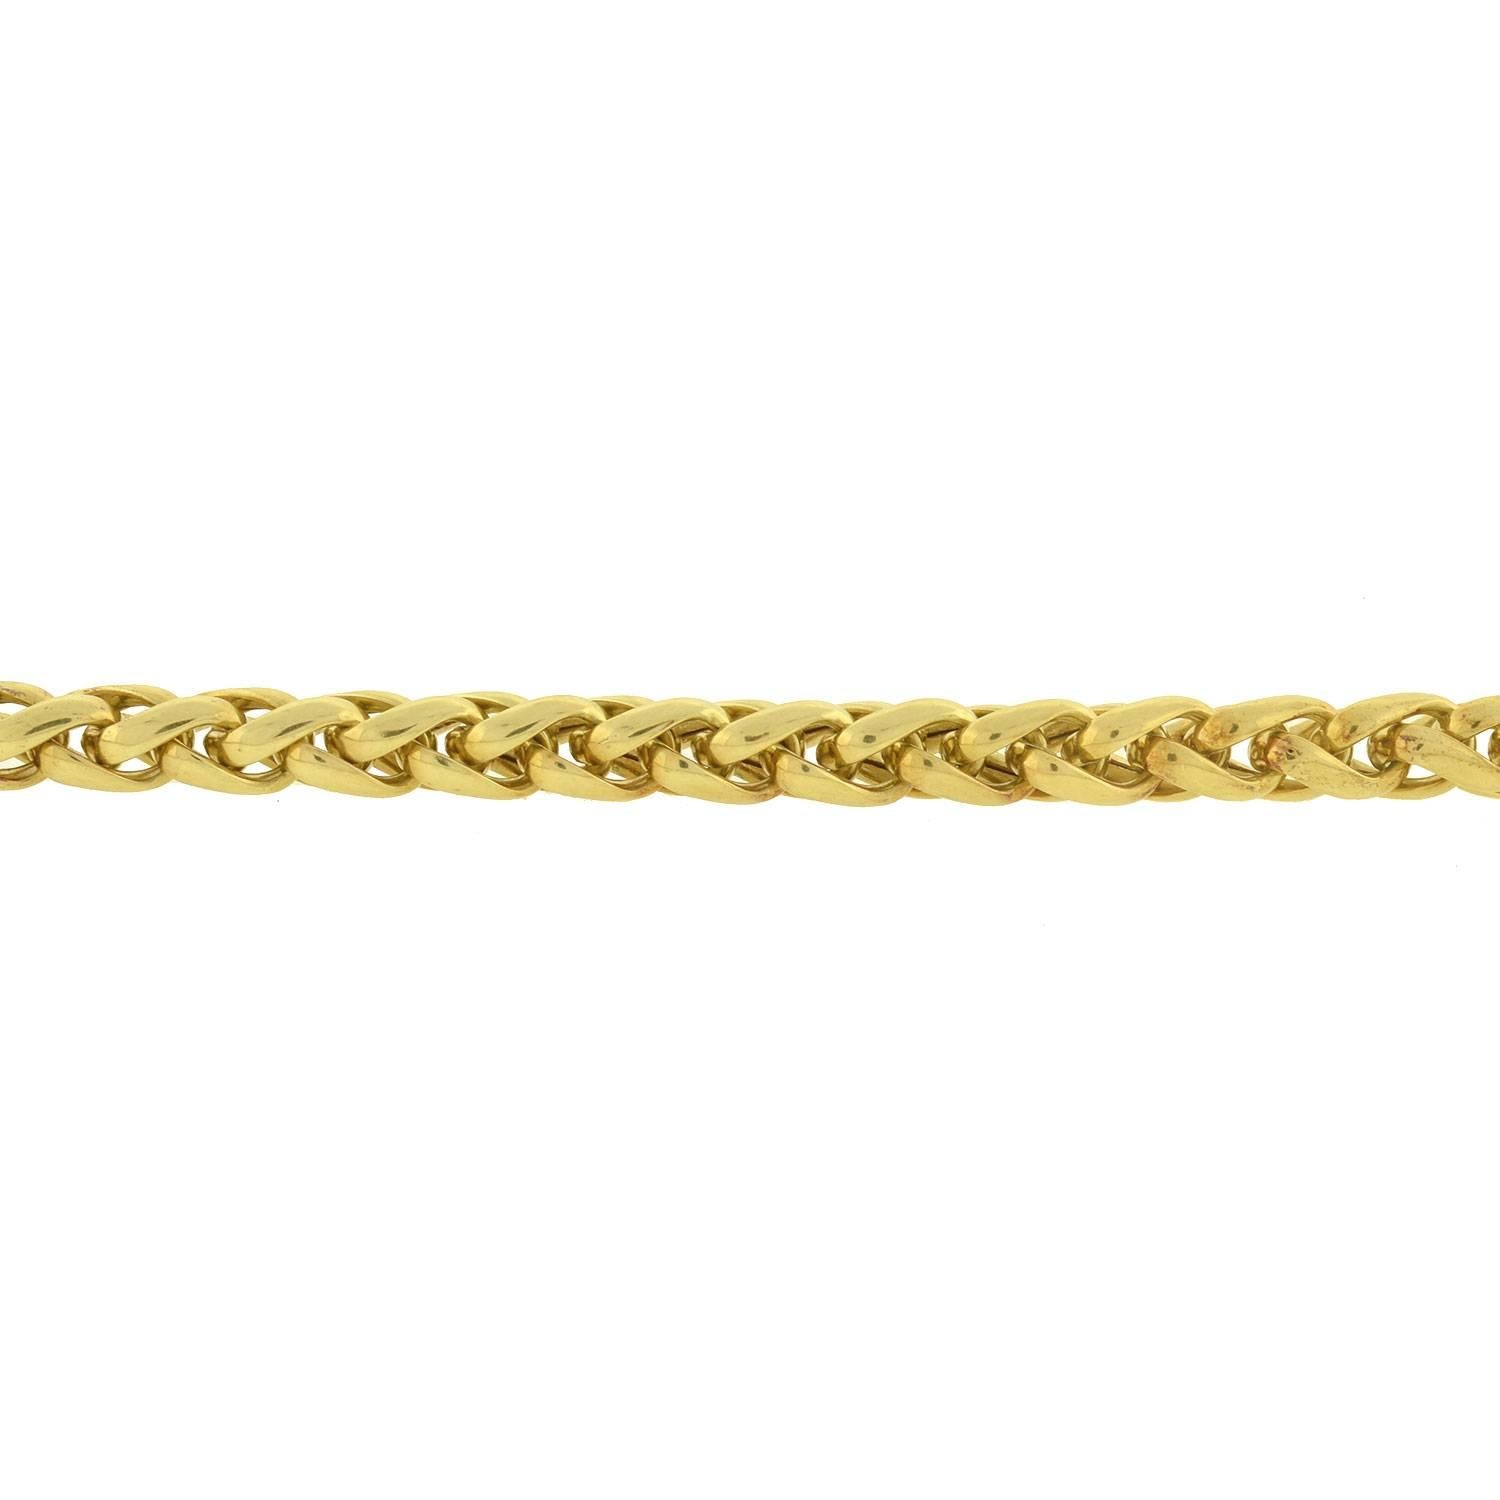 36 inch gold chain